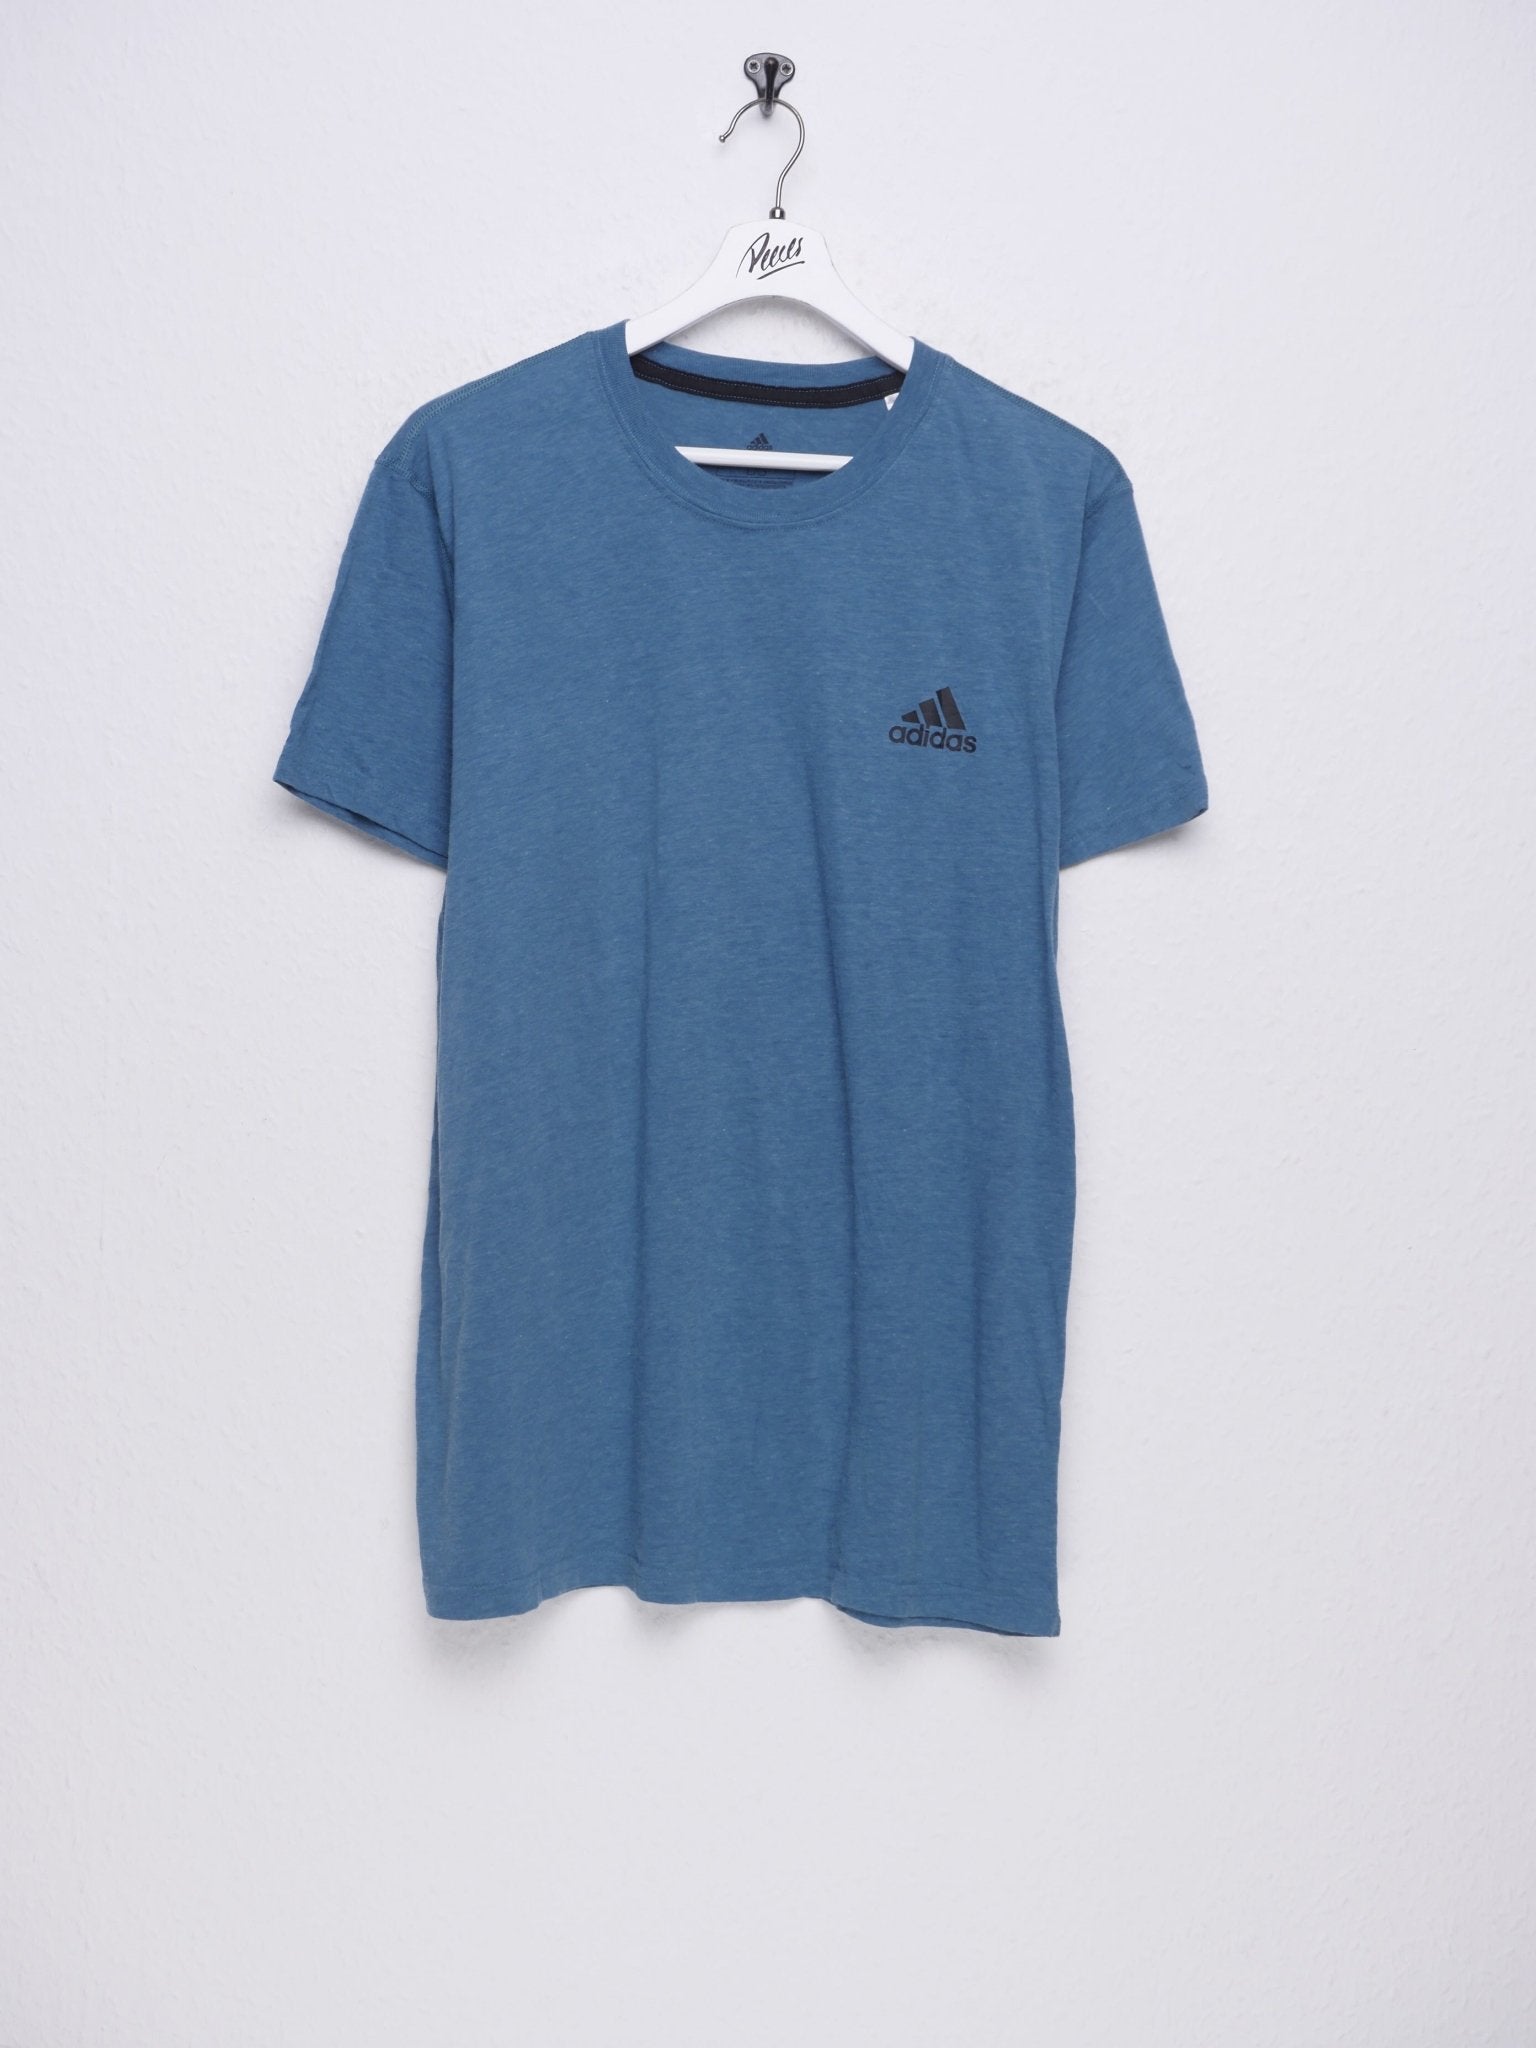 Adidas printed Logo basic blue Shirt - Peeces